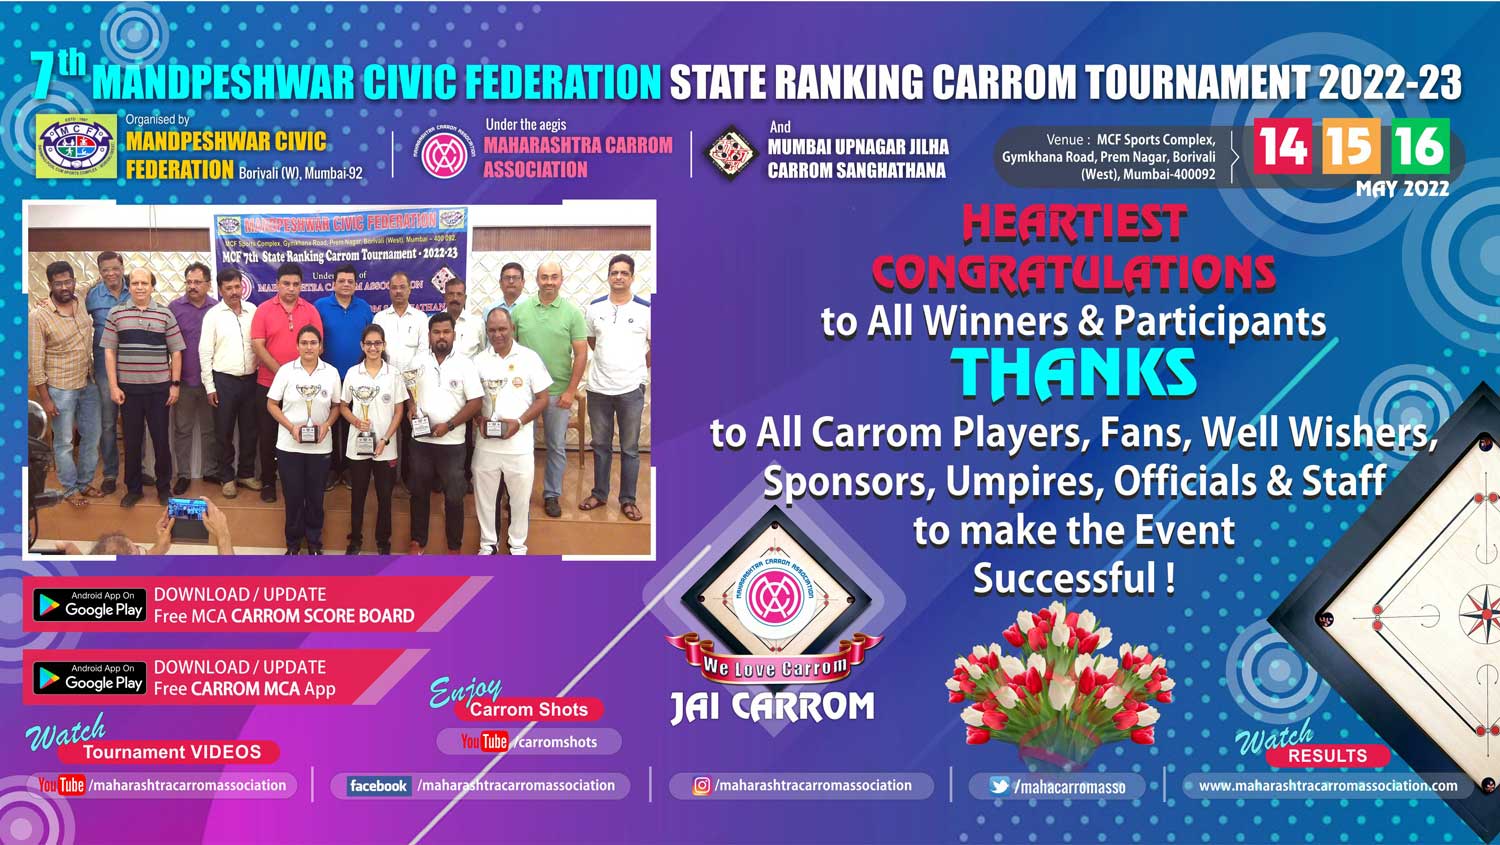 7th Mandpeshwar Civic Federation State Ranking Carrom Tournament 2022-23